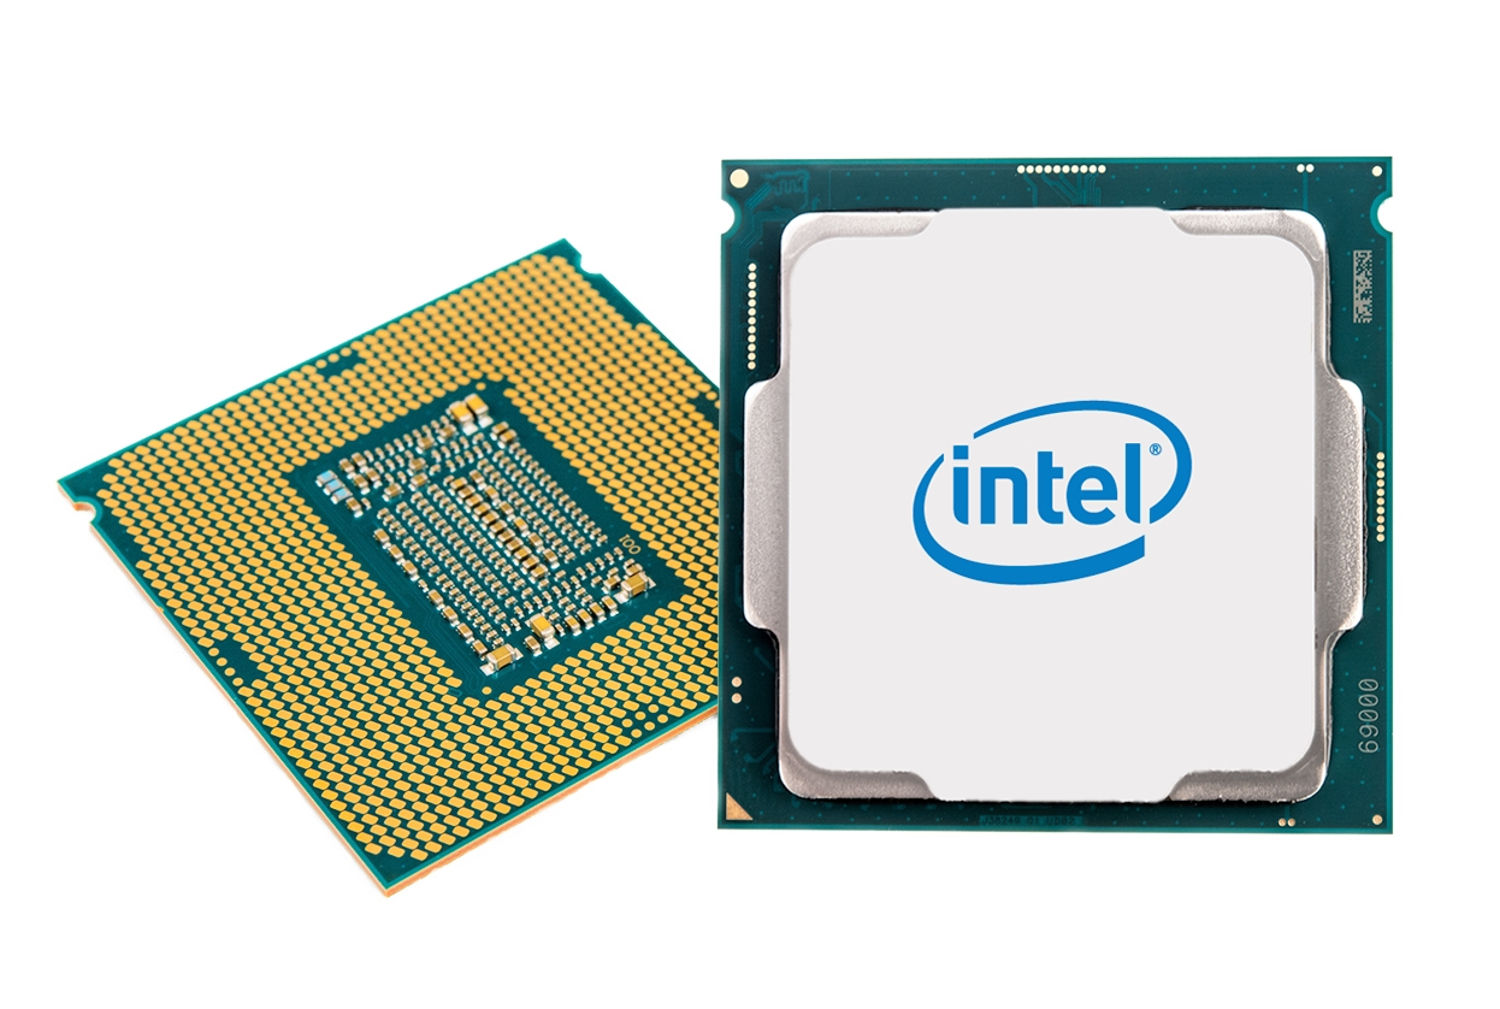 Intel Core i5-9400F | Pana Compu